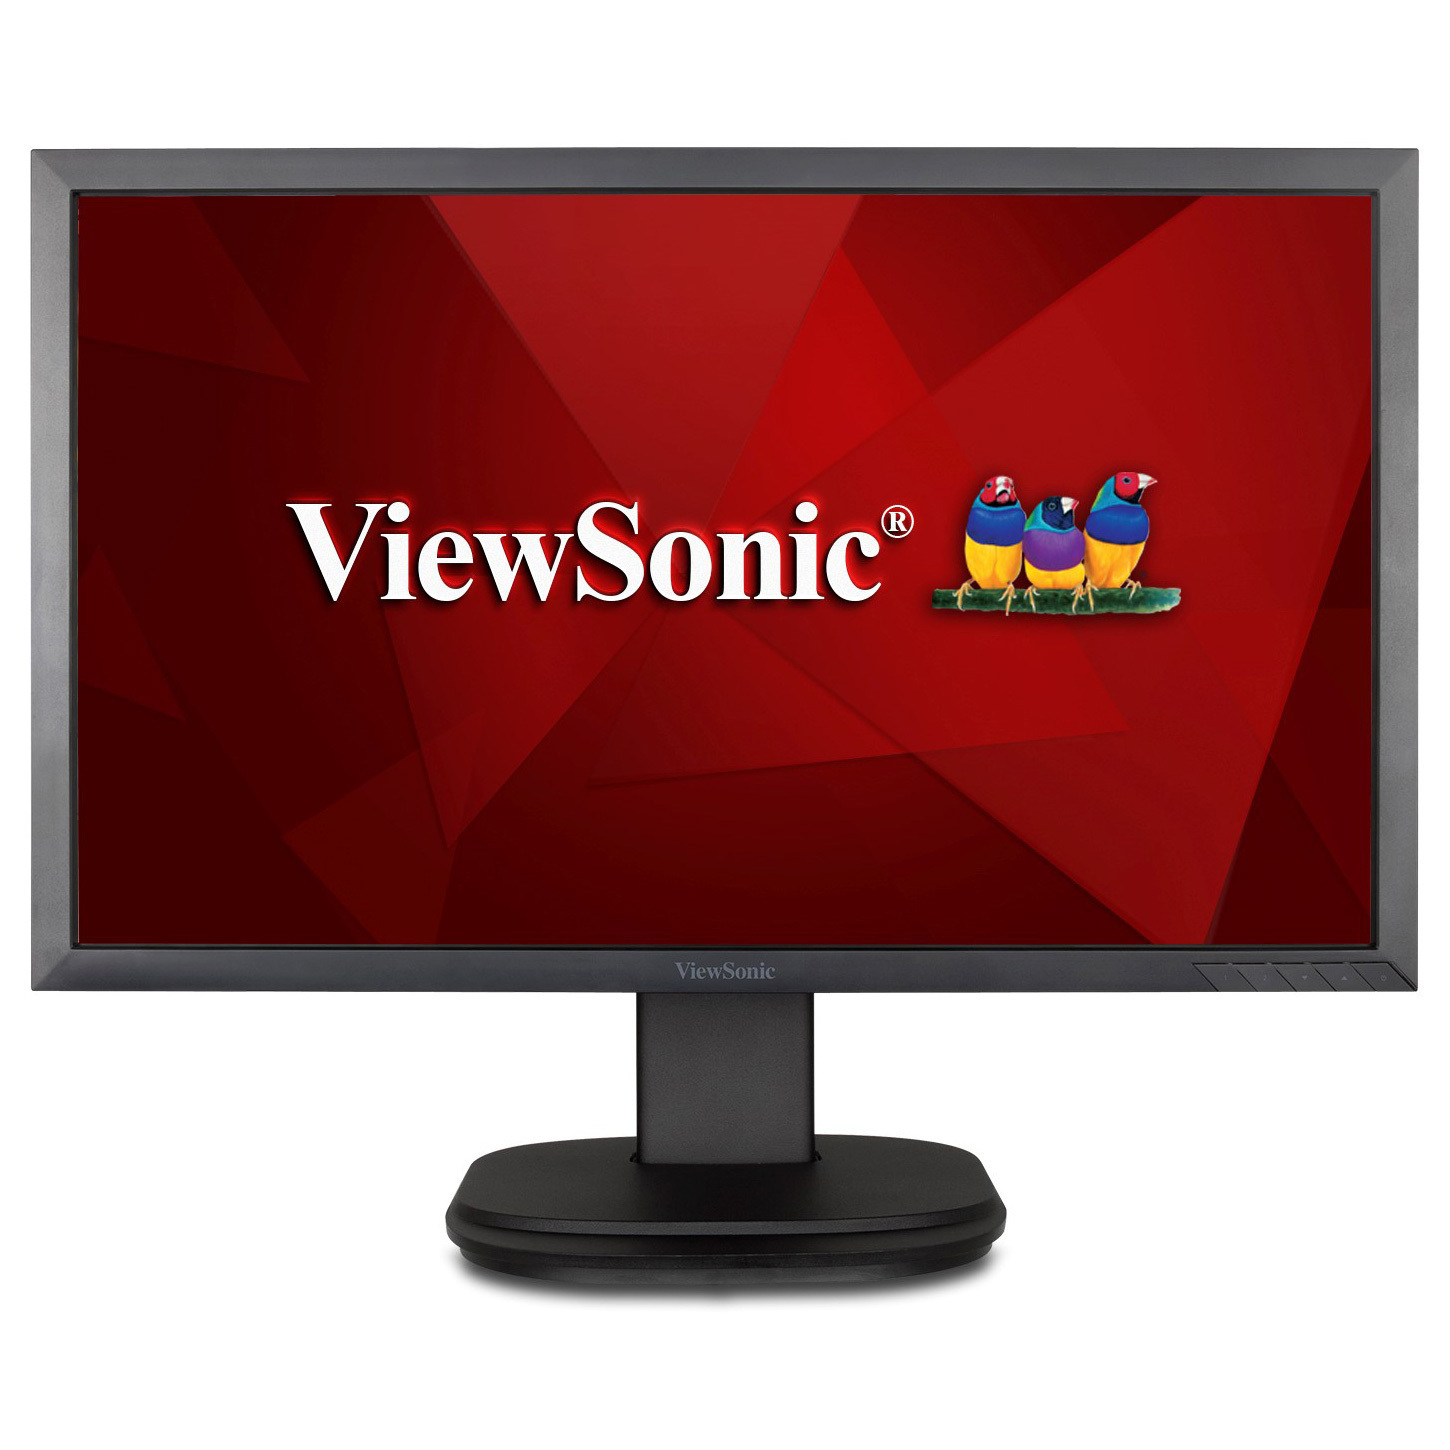 ViewSonic VG2239Smh-2 Projekt Comcave B-Ware - 54.6 cm (21.5 Zoll), LED, VA-Panel, Höhenverstellung, Pivot, DisplayPort, HDMI von Viewsonic